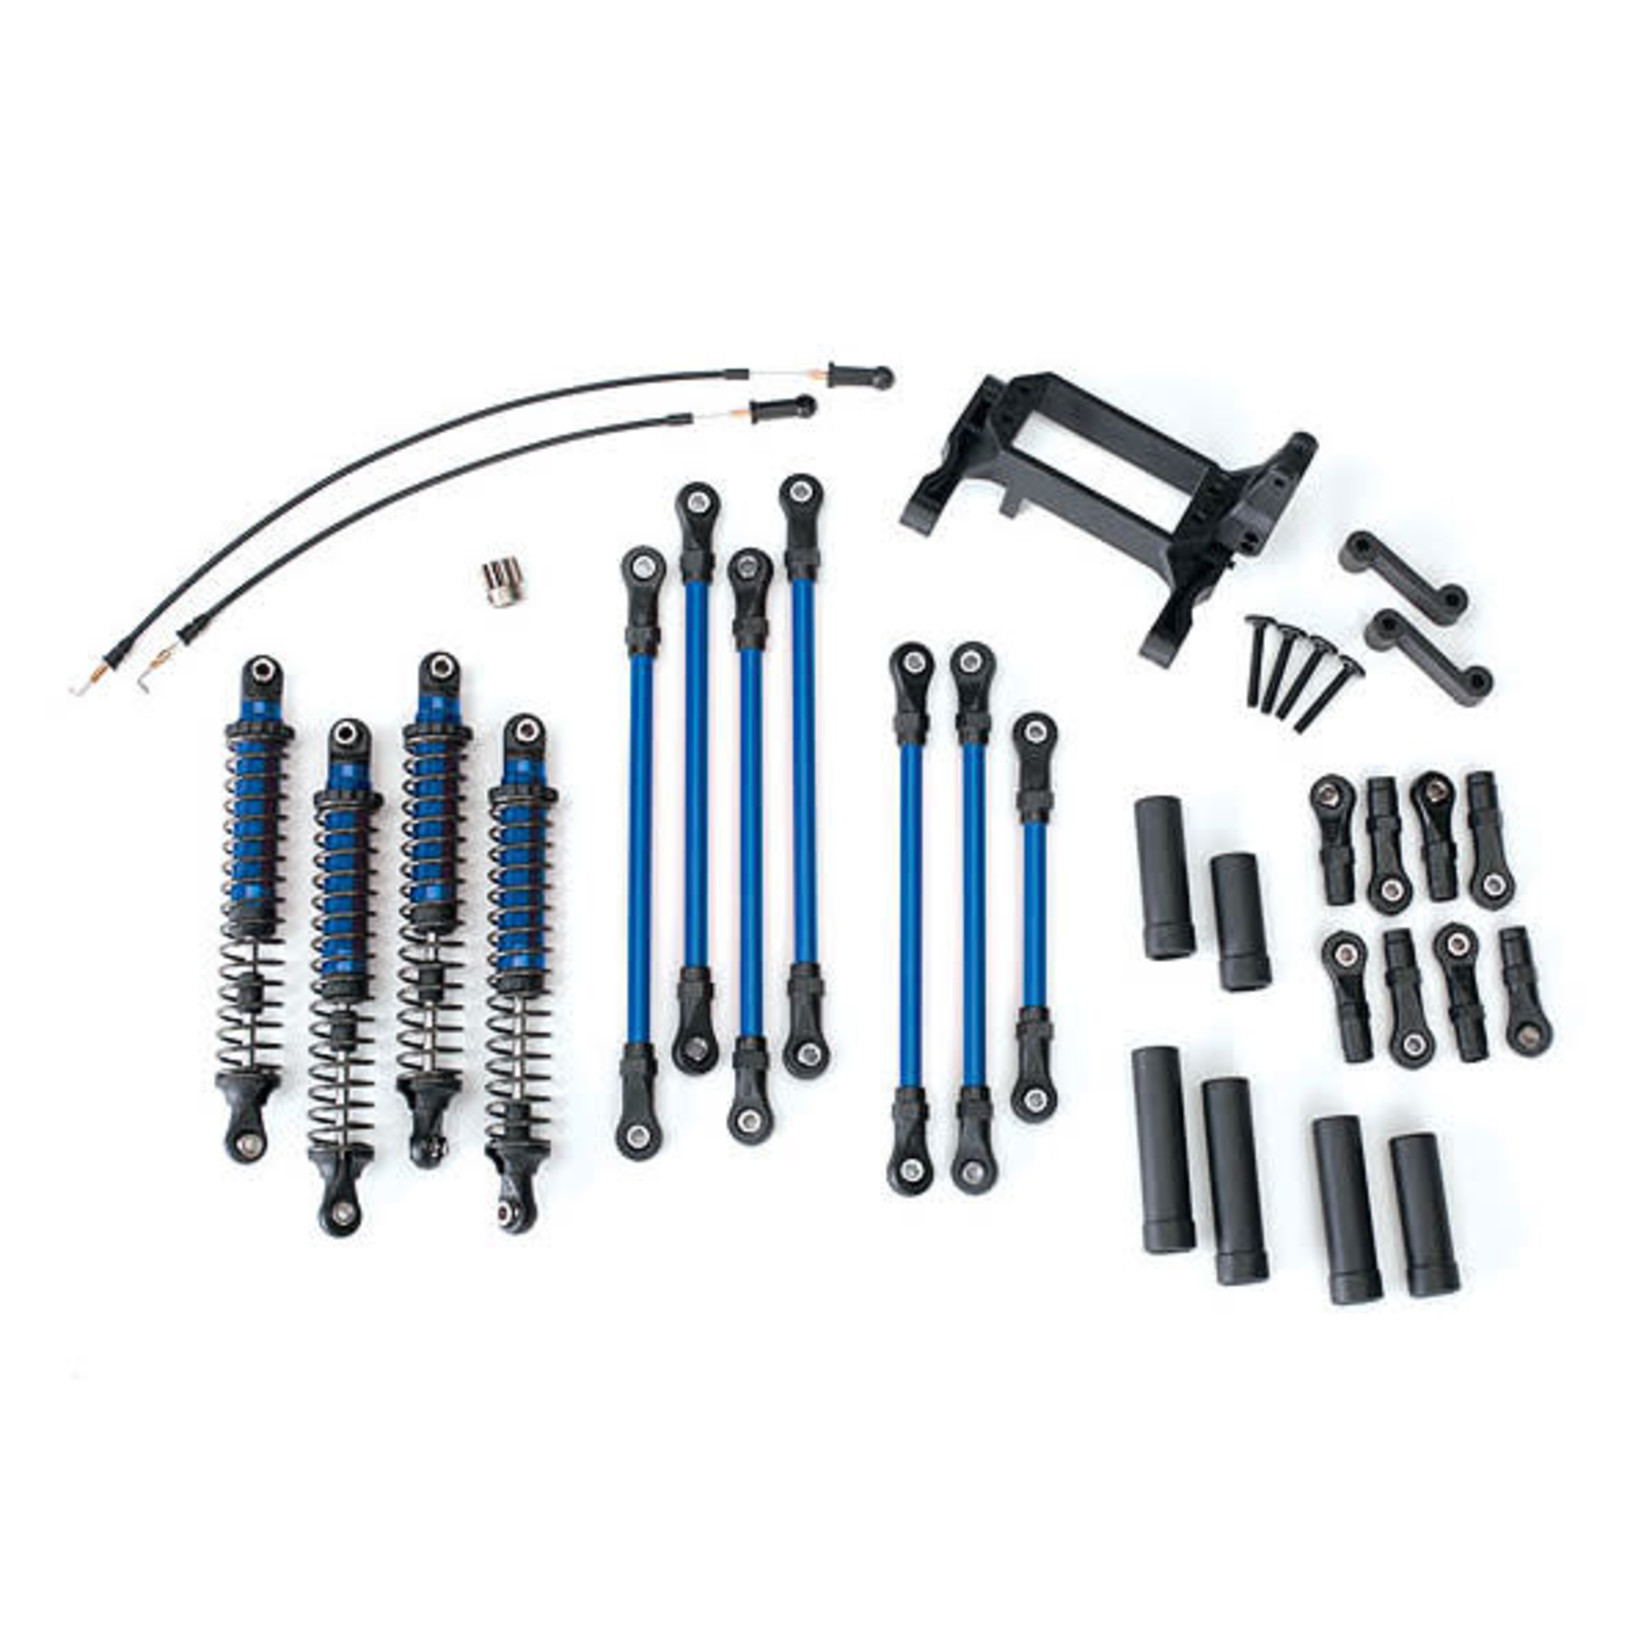 Traxxas Traxxas TRX-4 Complete Long Arm Lift Kit (Blue) #8140X